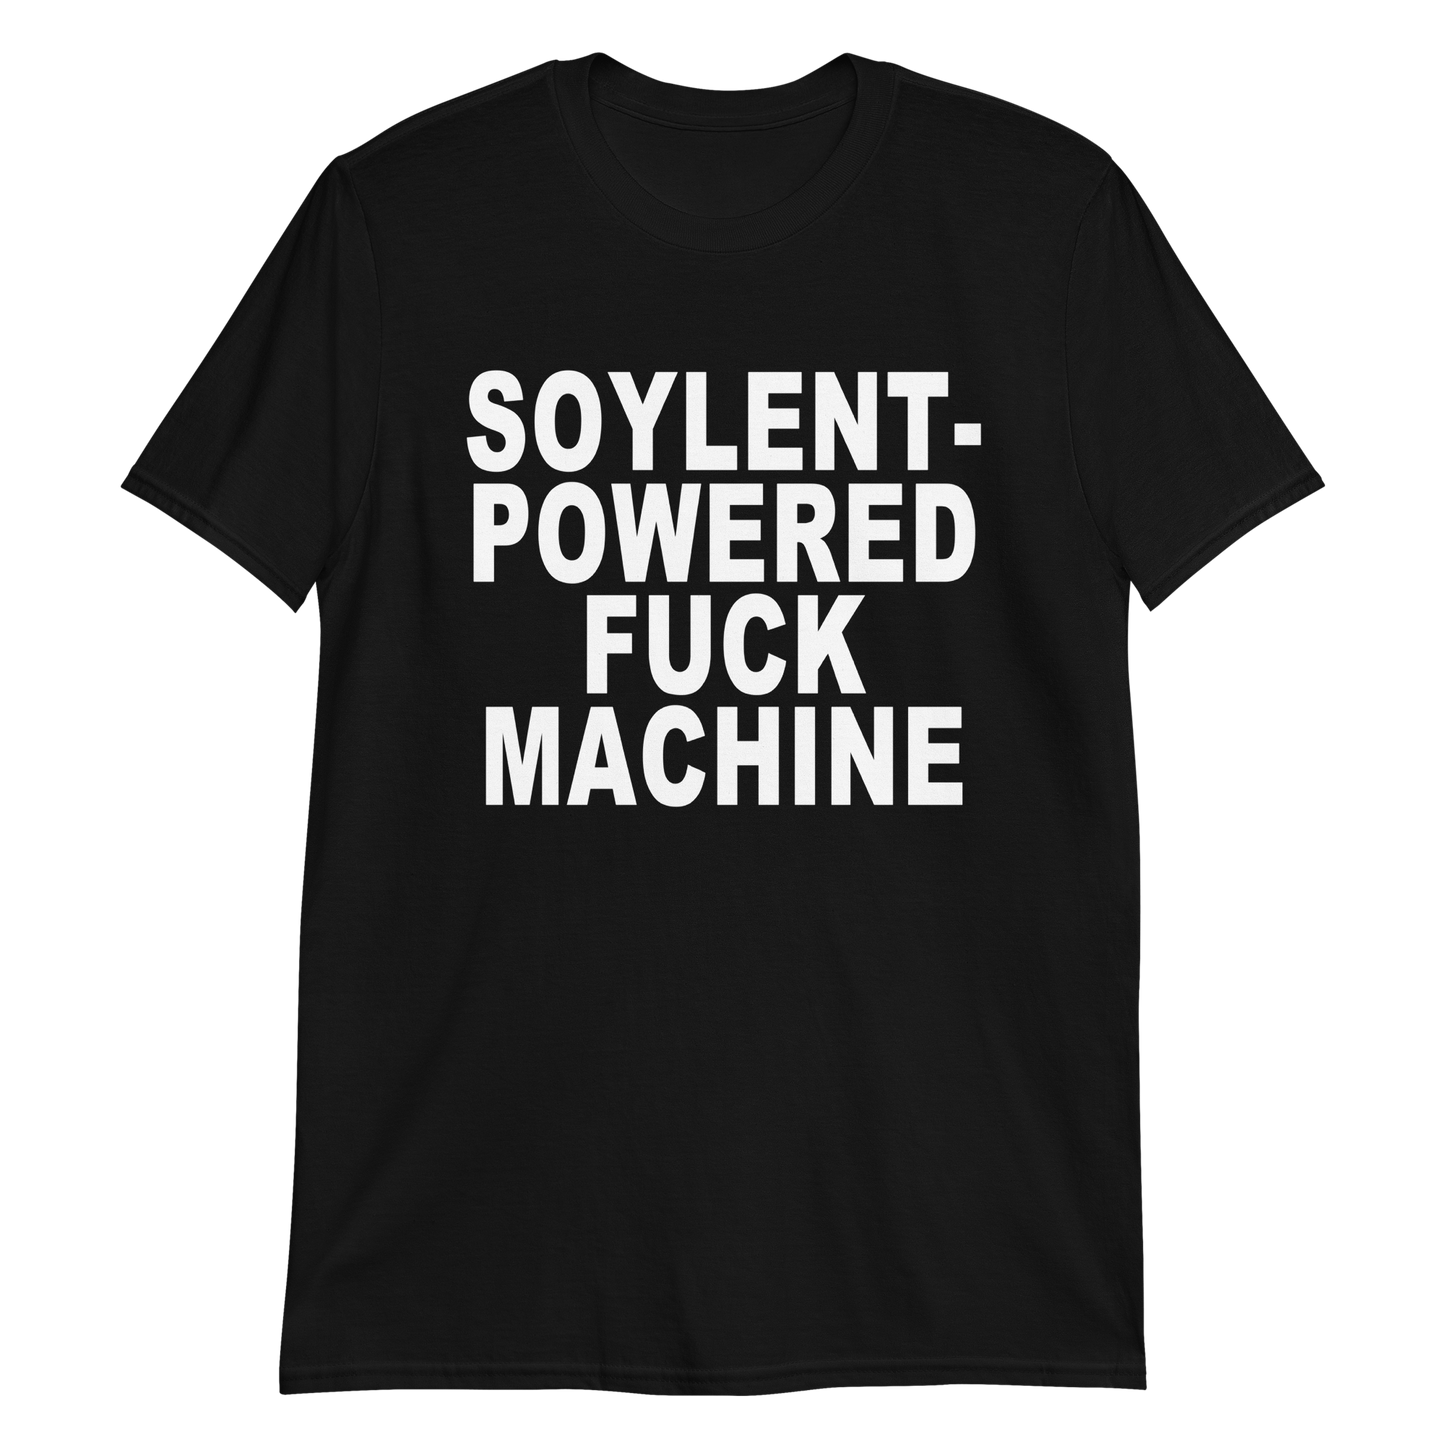 Soylent-Powered fuck machine.